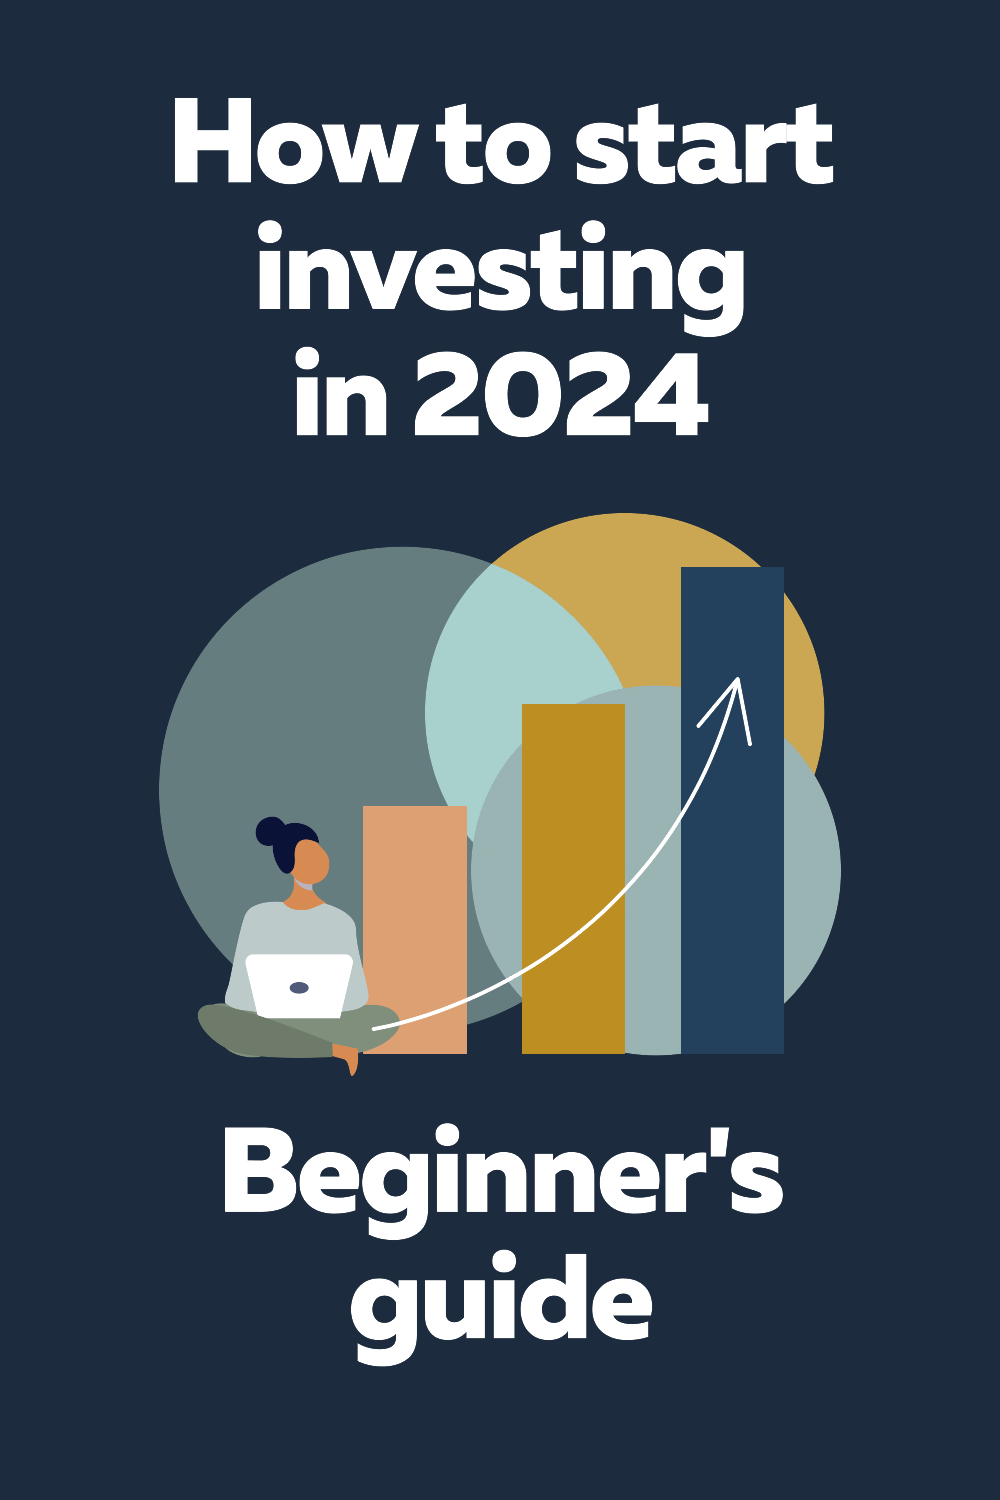 Beginner's guide: How to start investing in 2024